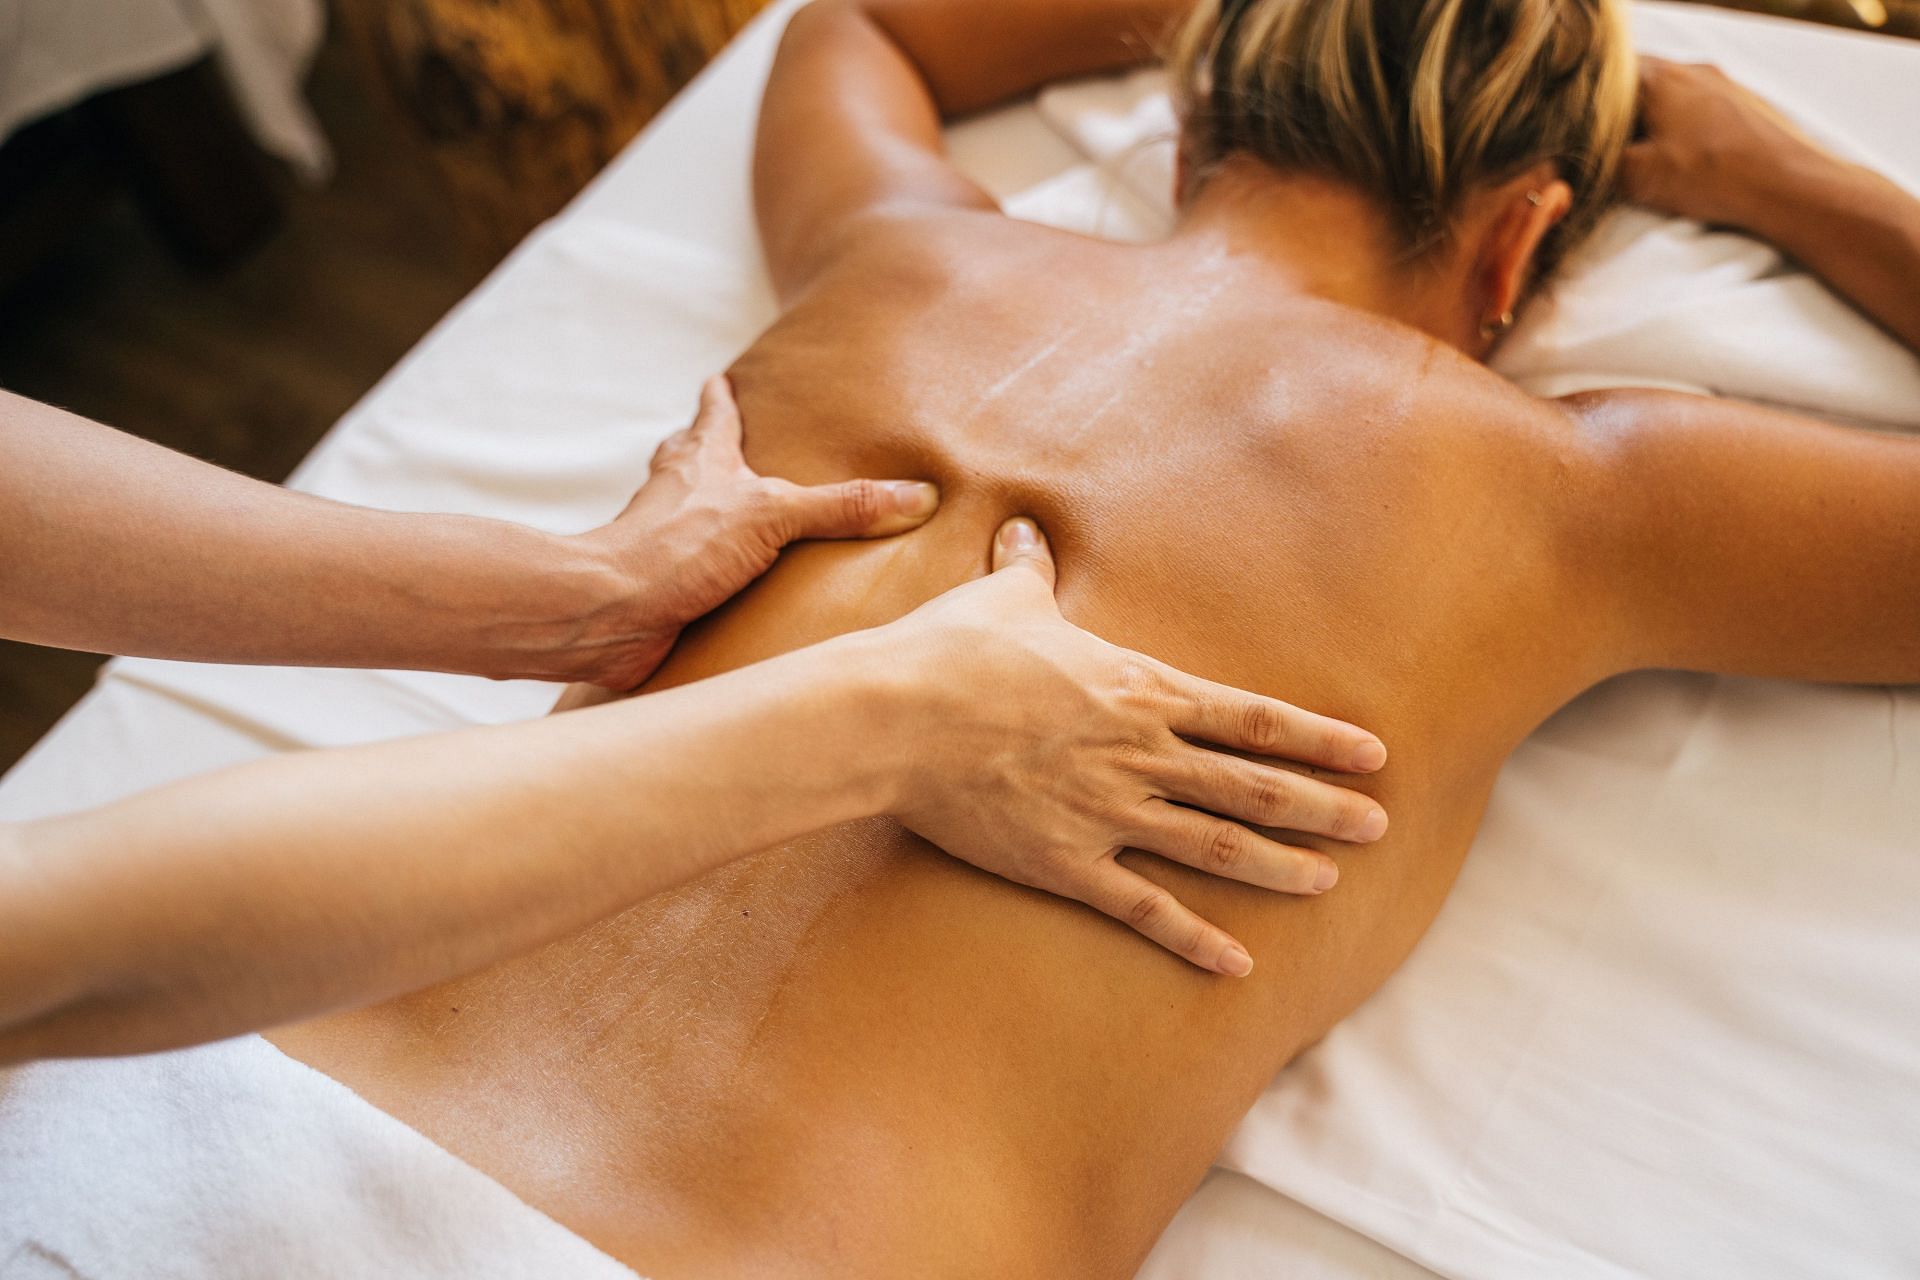 Benefits of massage - It increases flexibility. (Image via Pexels/ Anna Tarazevich)